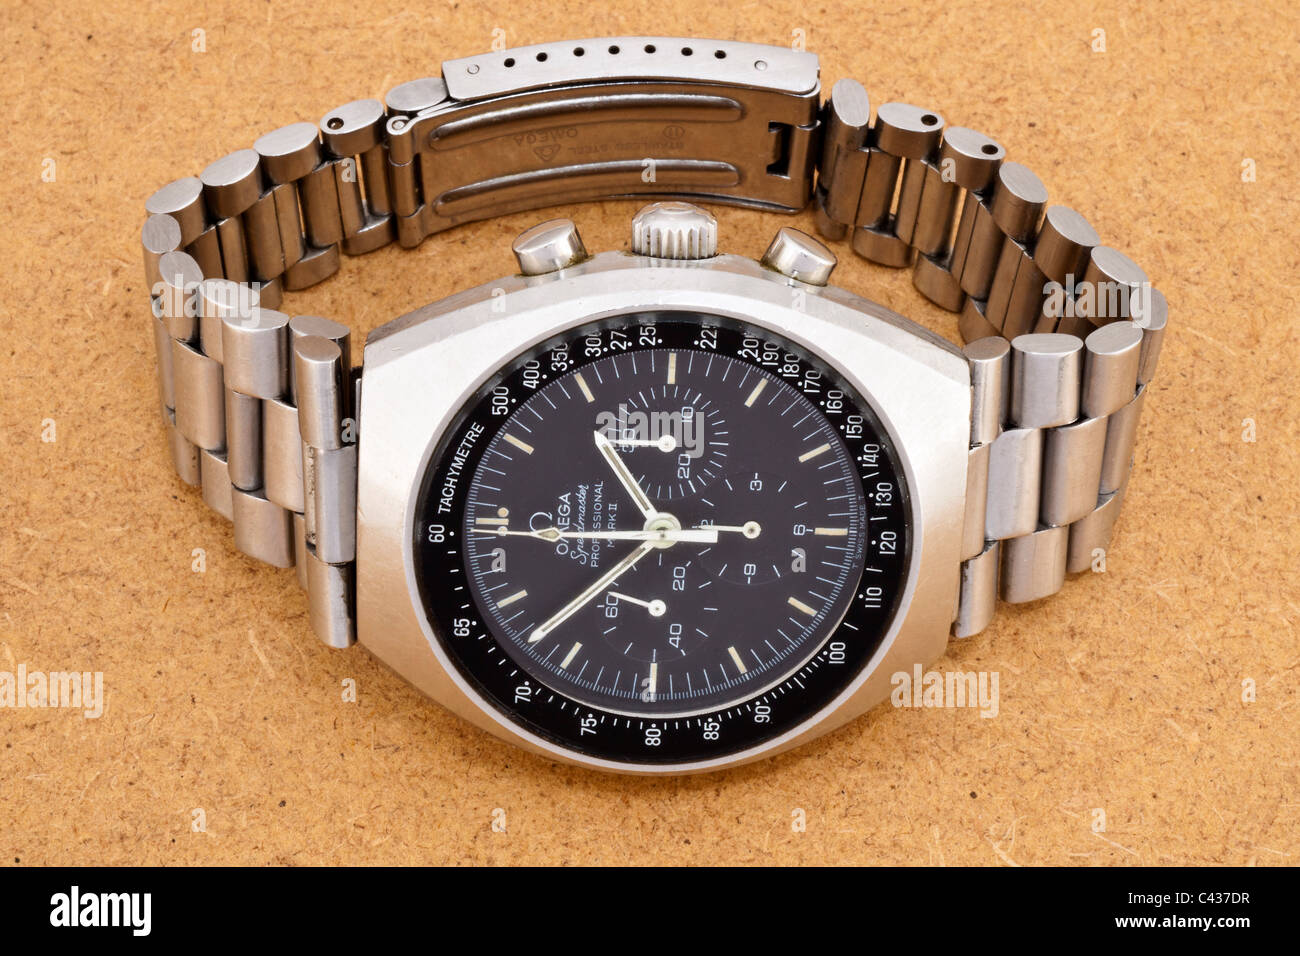 Omega Speedmaster Professional Mark II chronographe en acier inoxydable  montre-bracelet suisse avec cadran noir et blanc mains JMH4894 Photo Stock  - Alamy